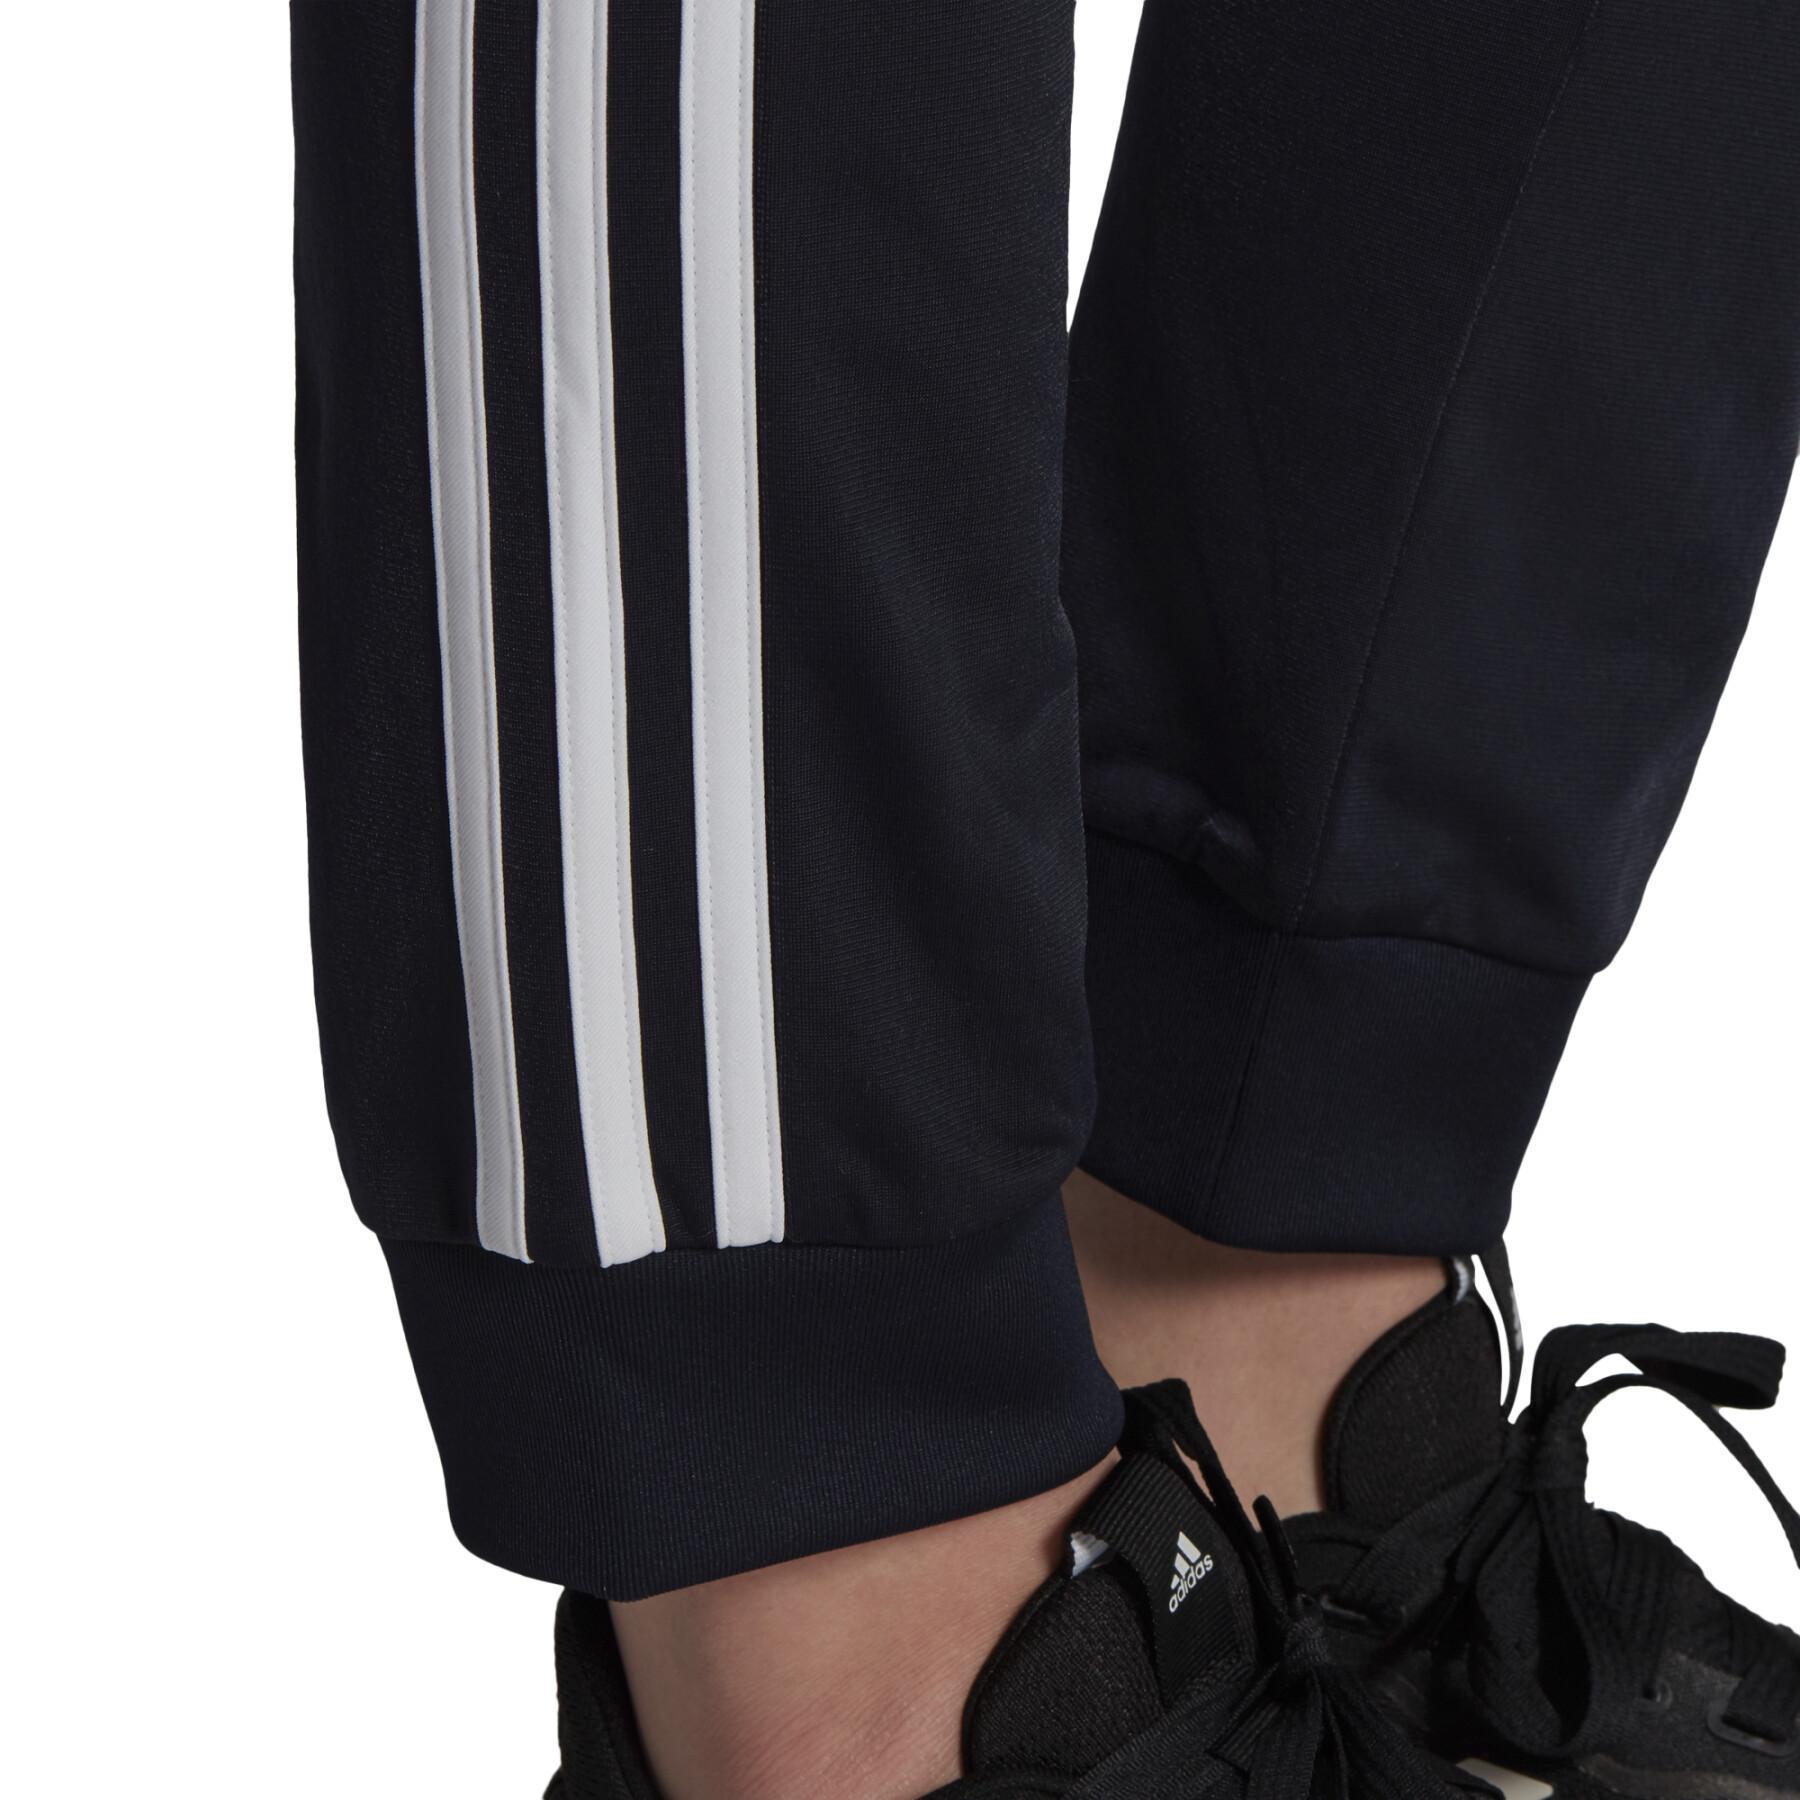 Pantalon femme adidas Primegreen Essentials Warm-Up Slim Tapered 3-Stripes